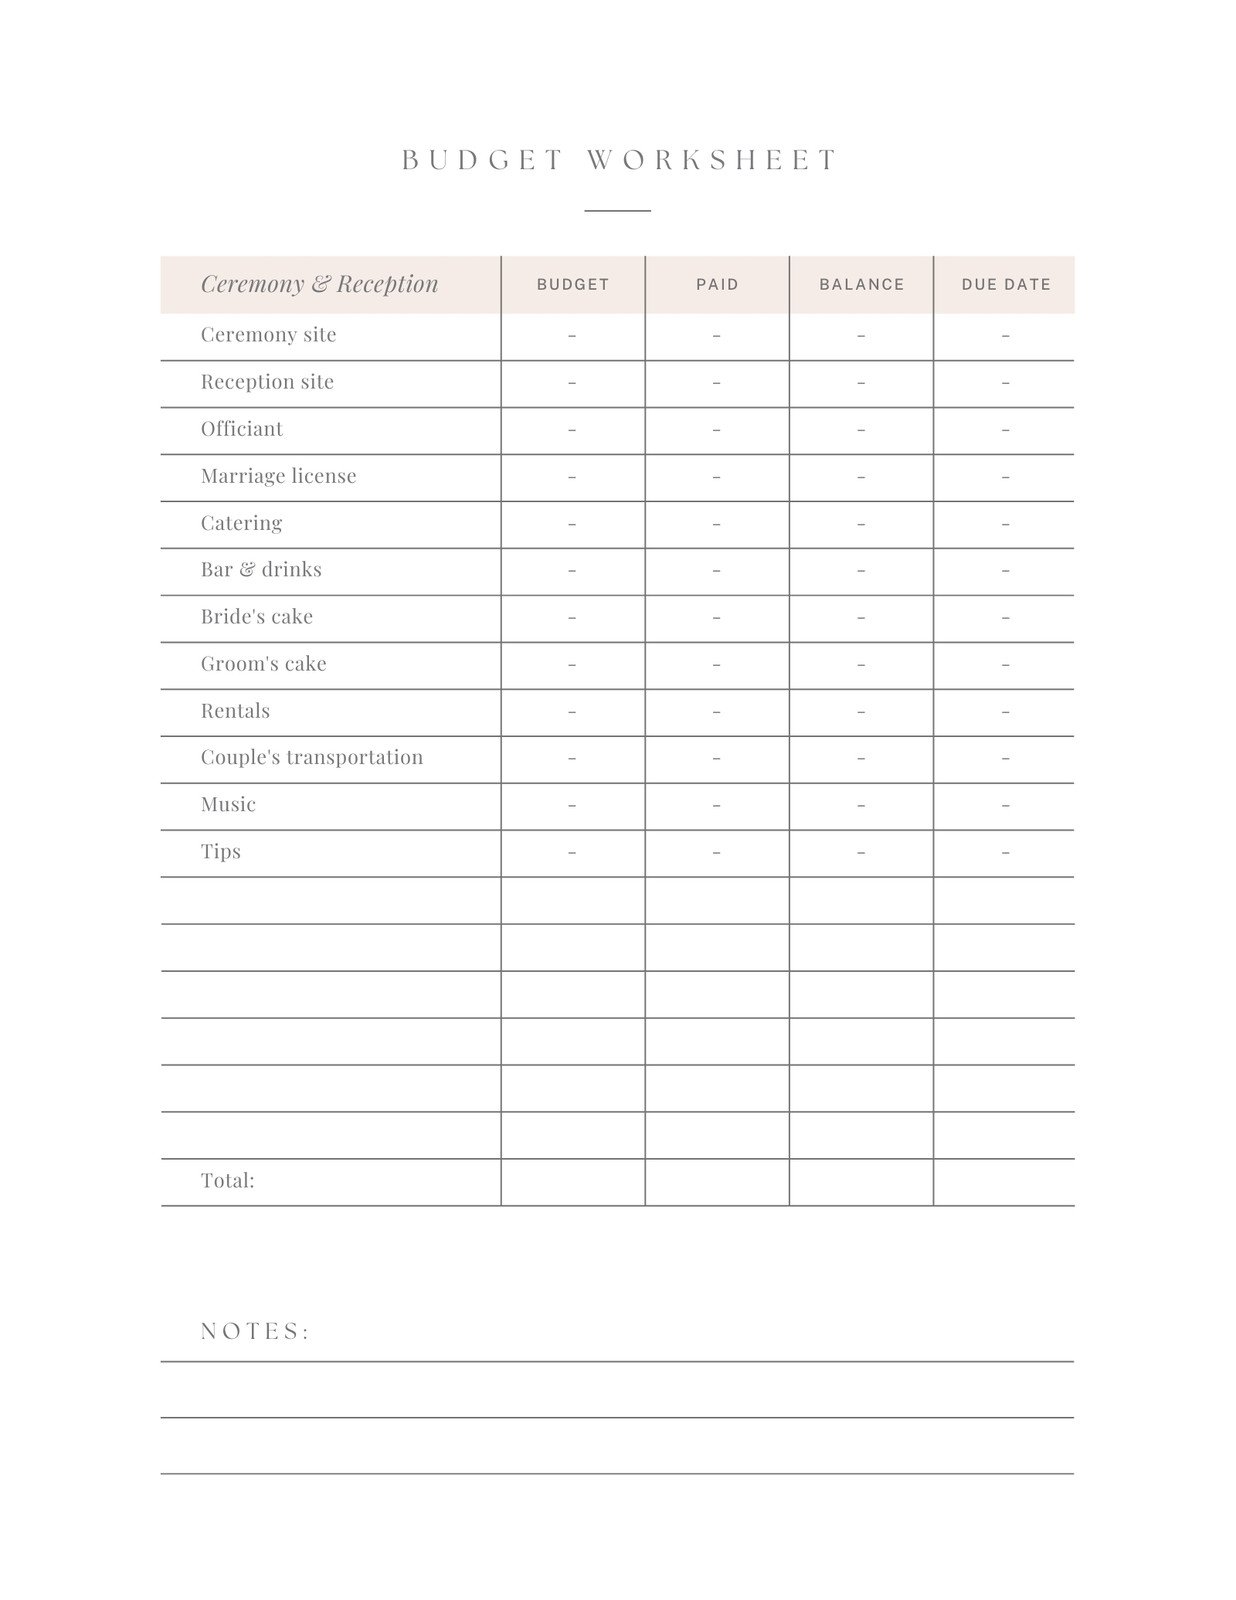 https://marketplace.canva.com/EAFbVewFgxY/2/0/1236w/canva-simple-wedding-budget-planning-worksheet-checklist-pL0pWIytNTw.jpg